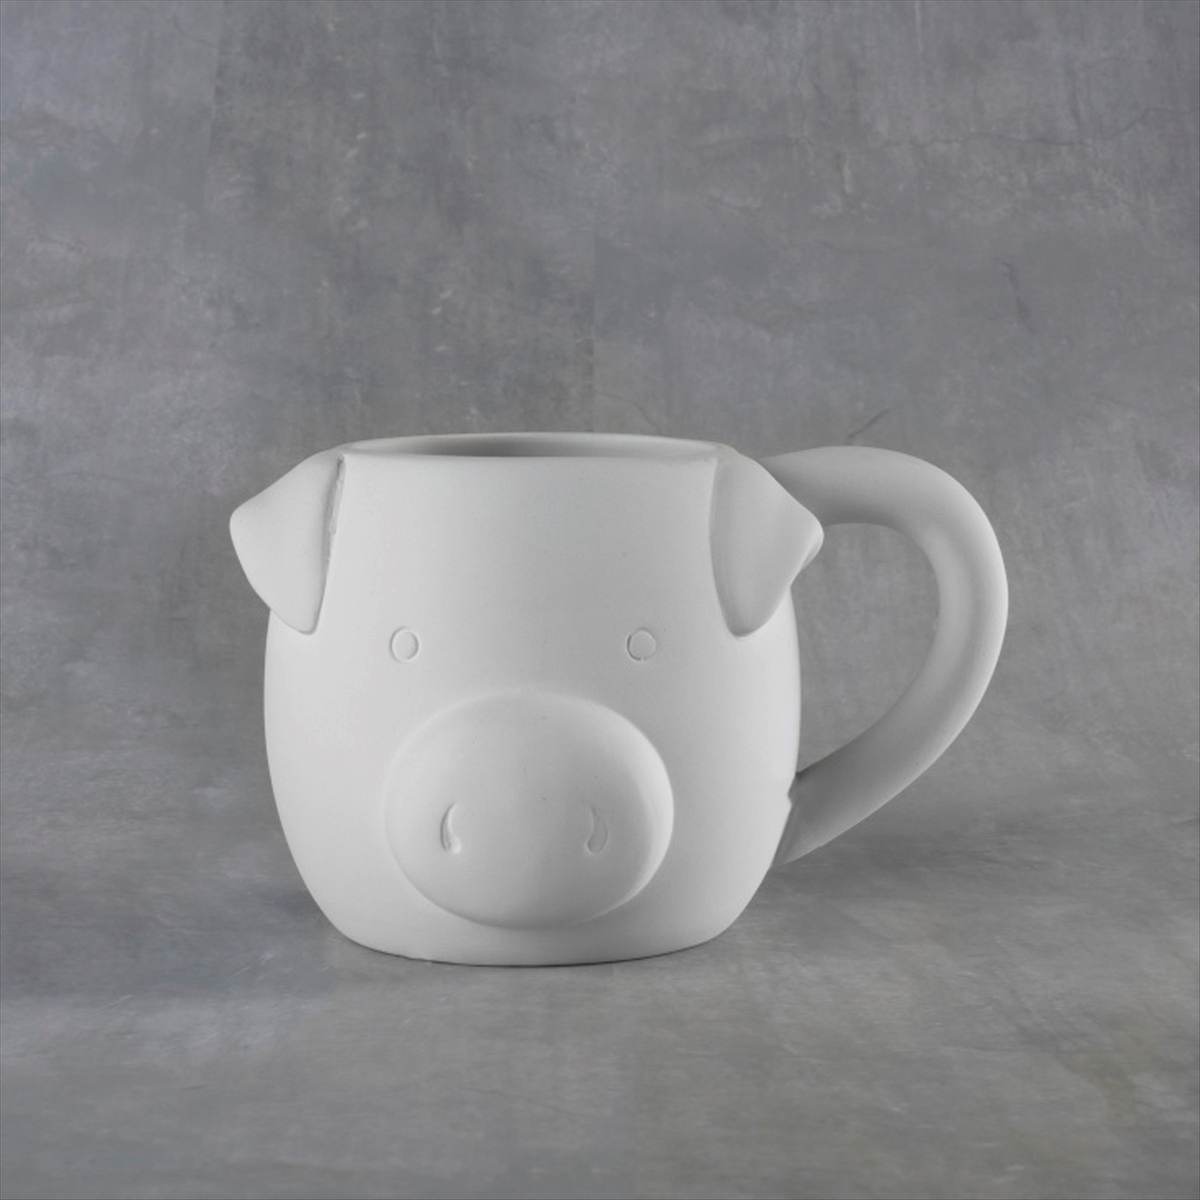 Duncan 38117 Bisque Pig Mug 16 oz